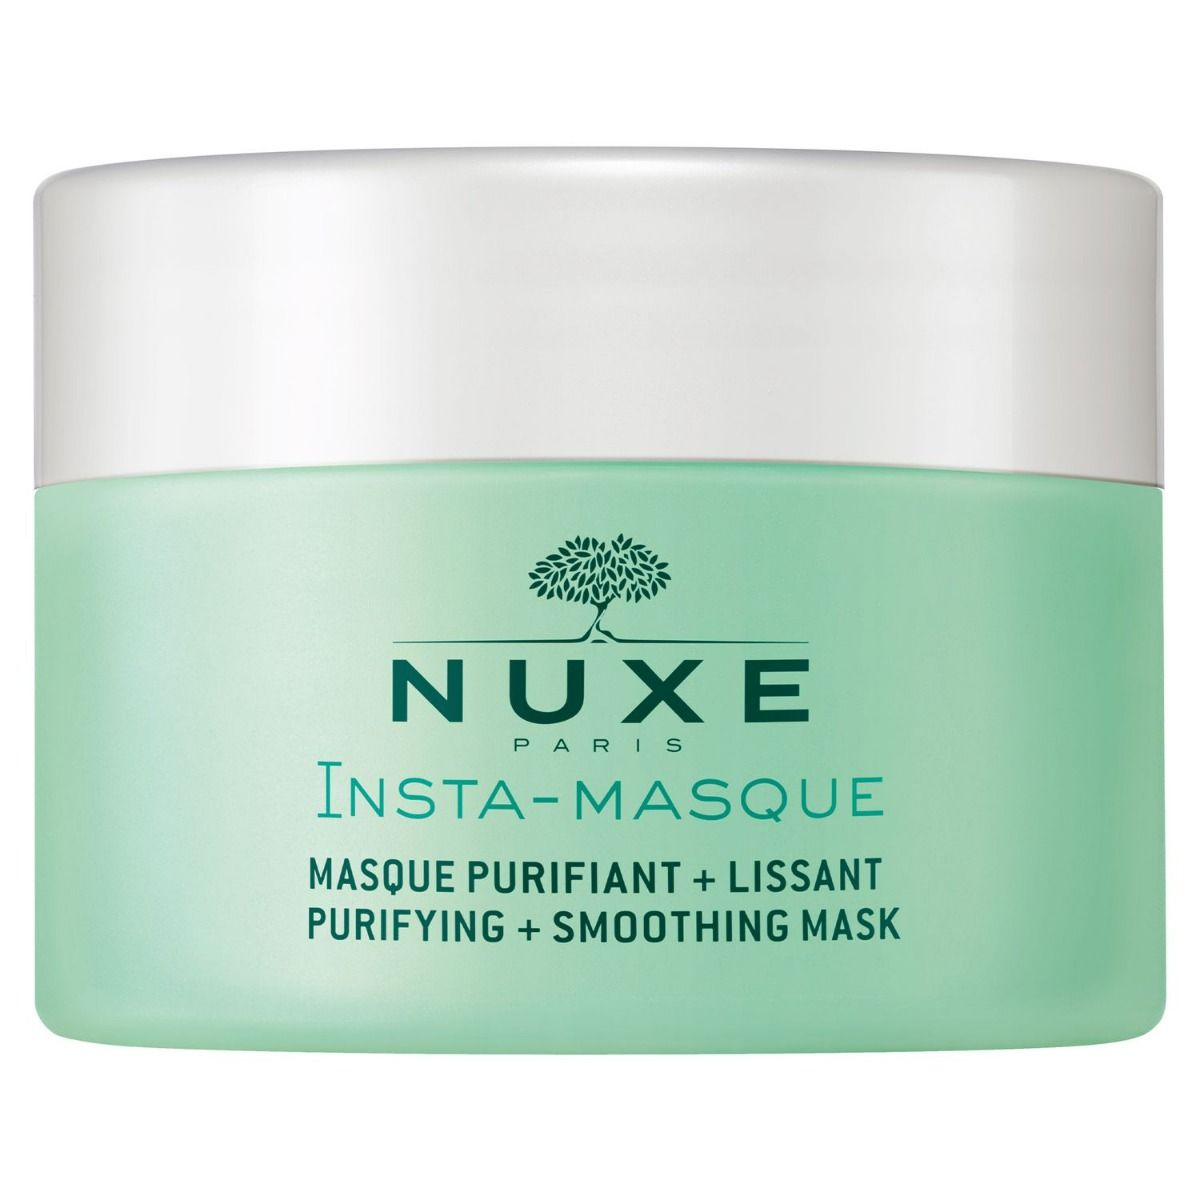 Nuxe Insta-Masque Purifiant + Lissant медицинская маска, 50 ml розы красные 15мл отдушка